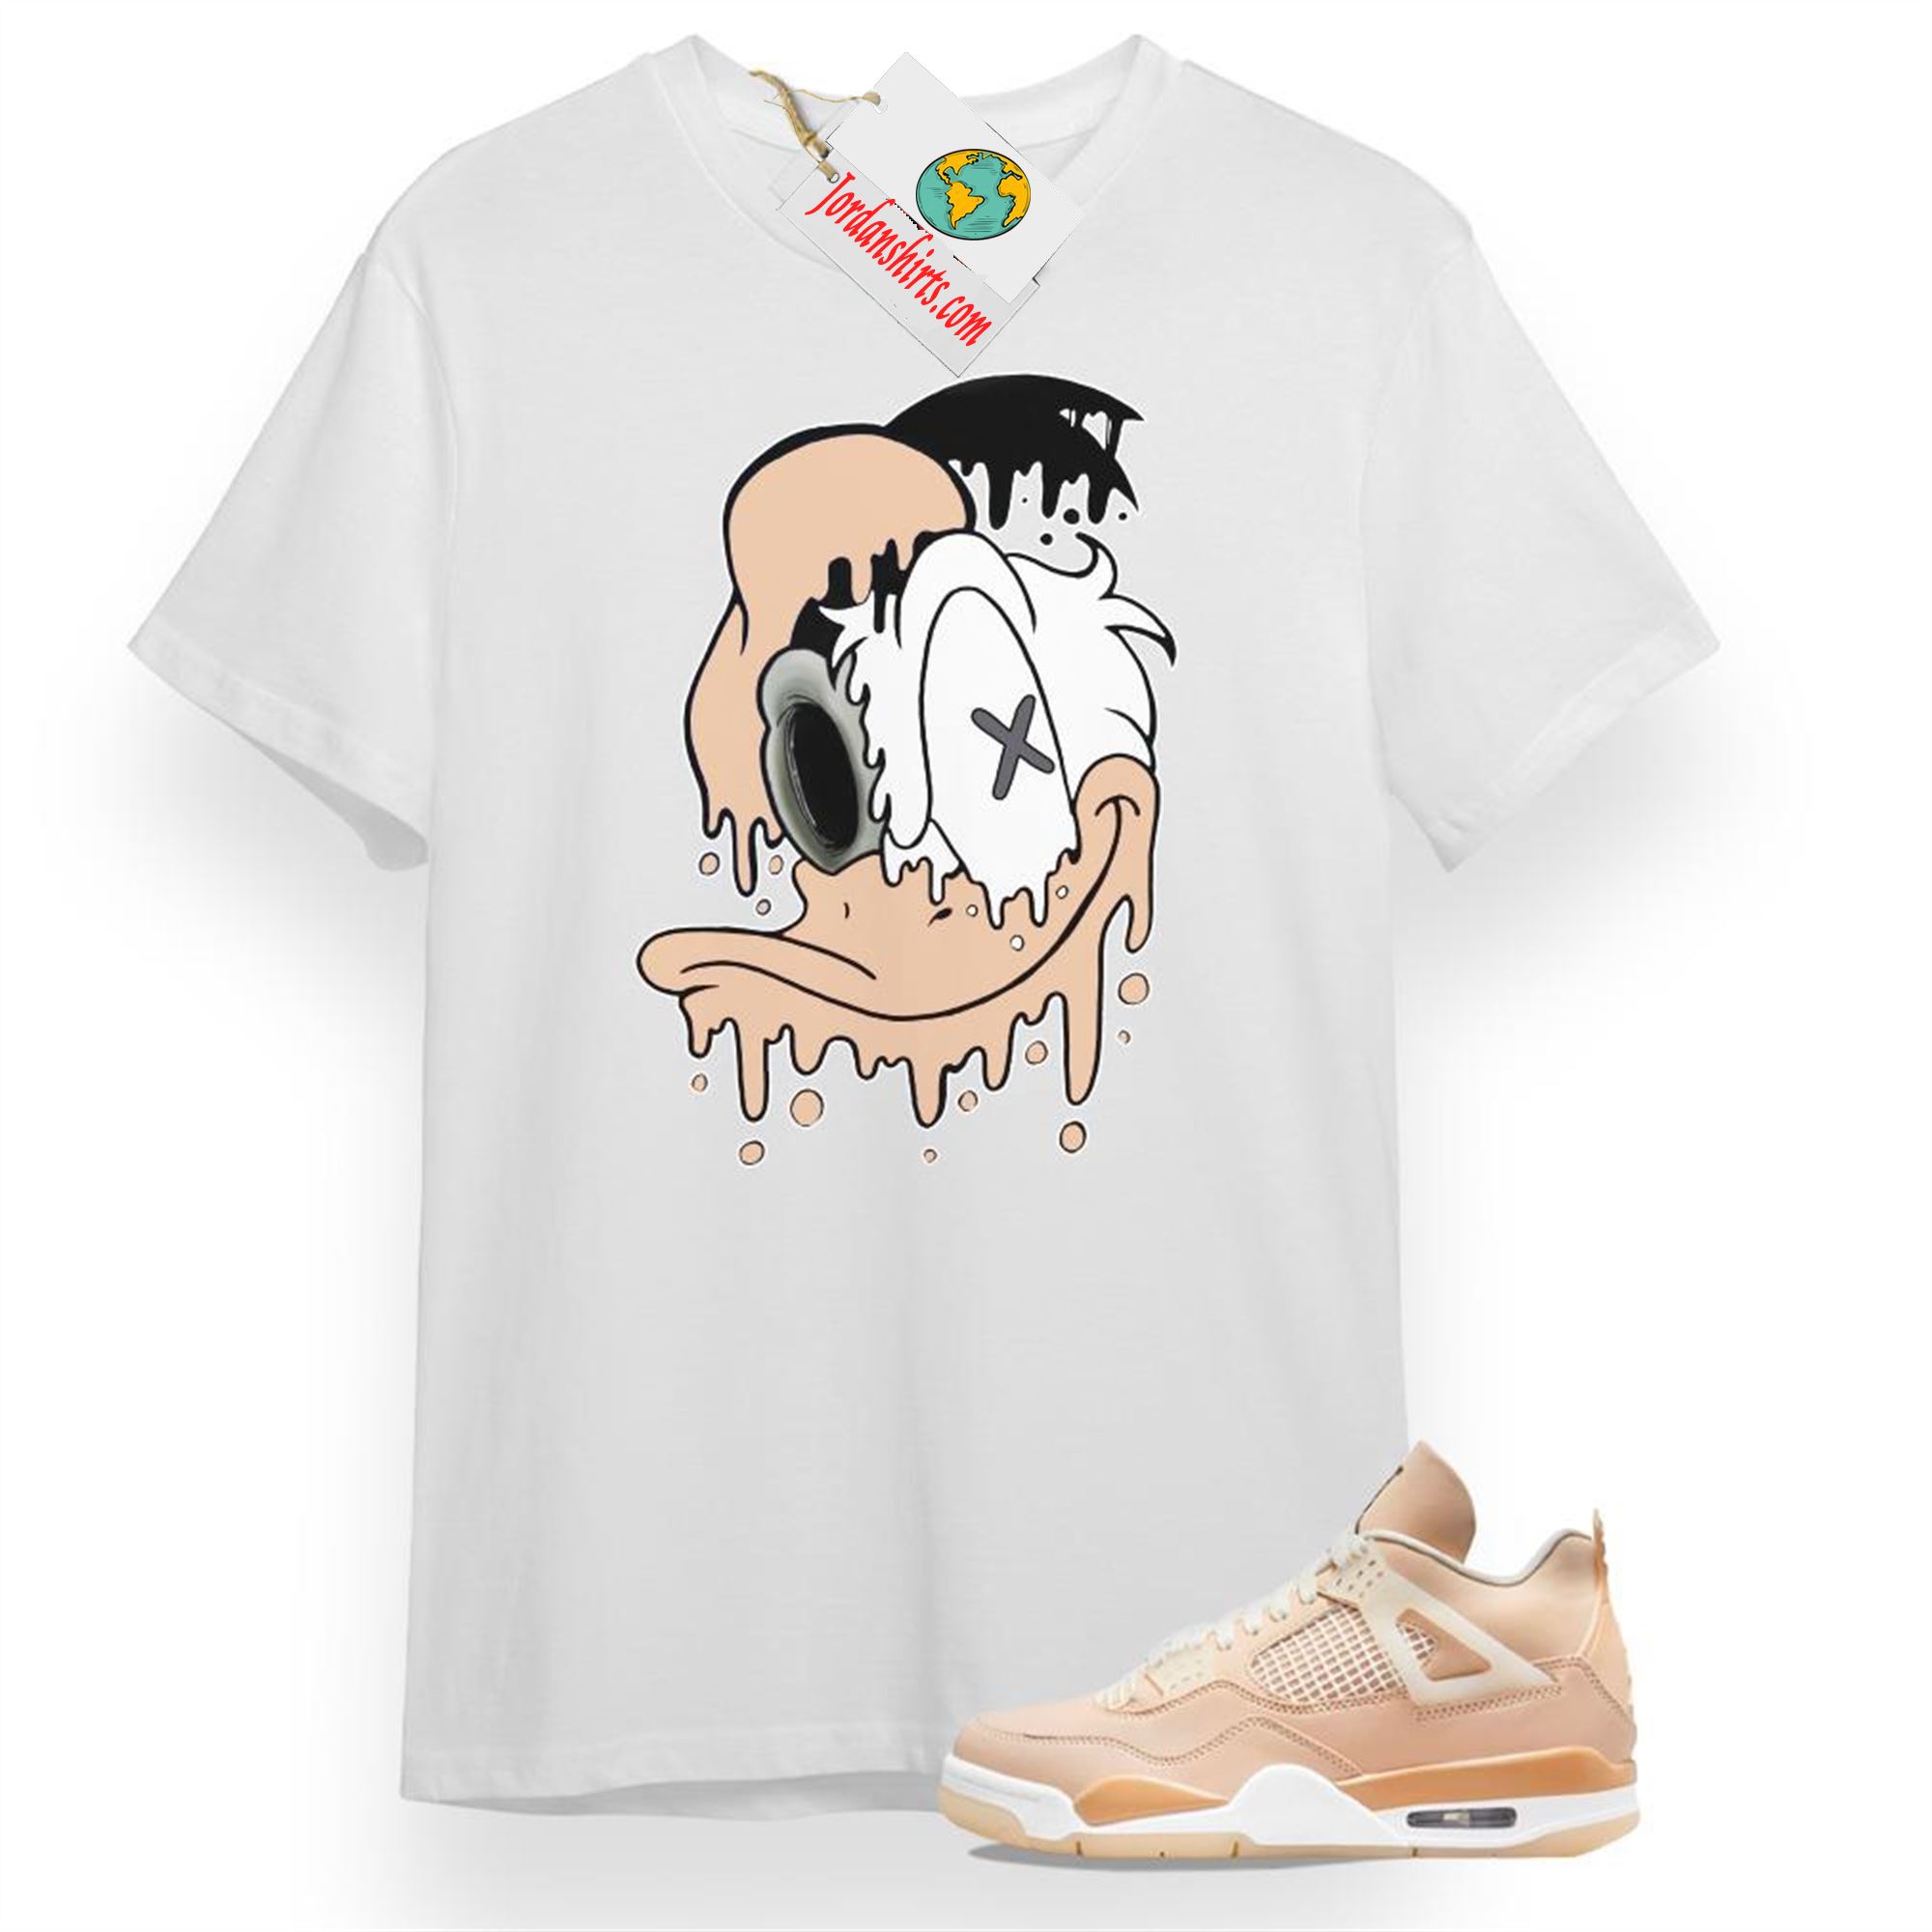 Jordan 4 Shirt, Donald Dripping White T-shirt Air Jordan 4 Shimmer 4s Size Up To 5xl